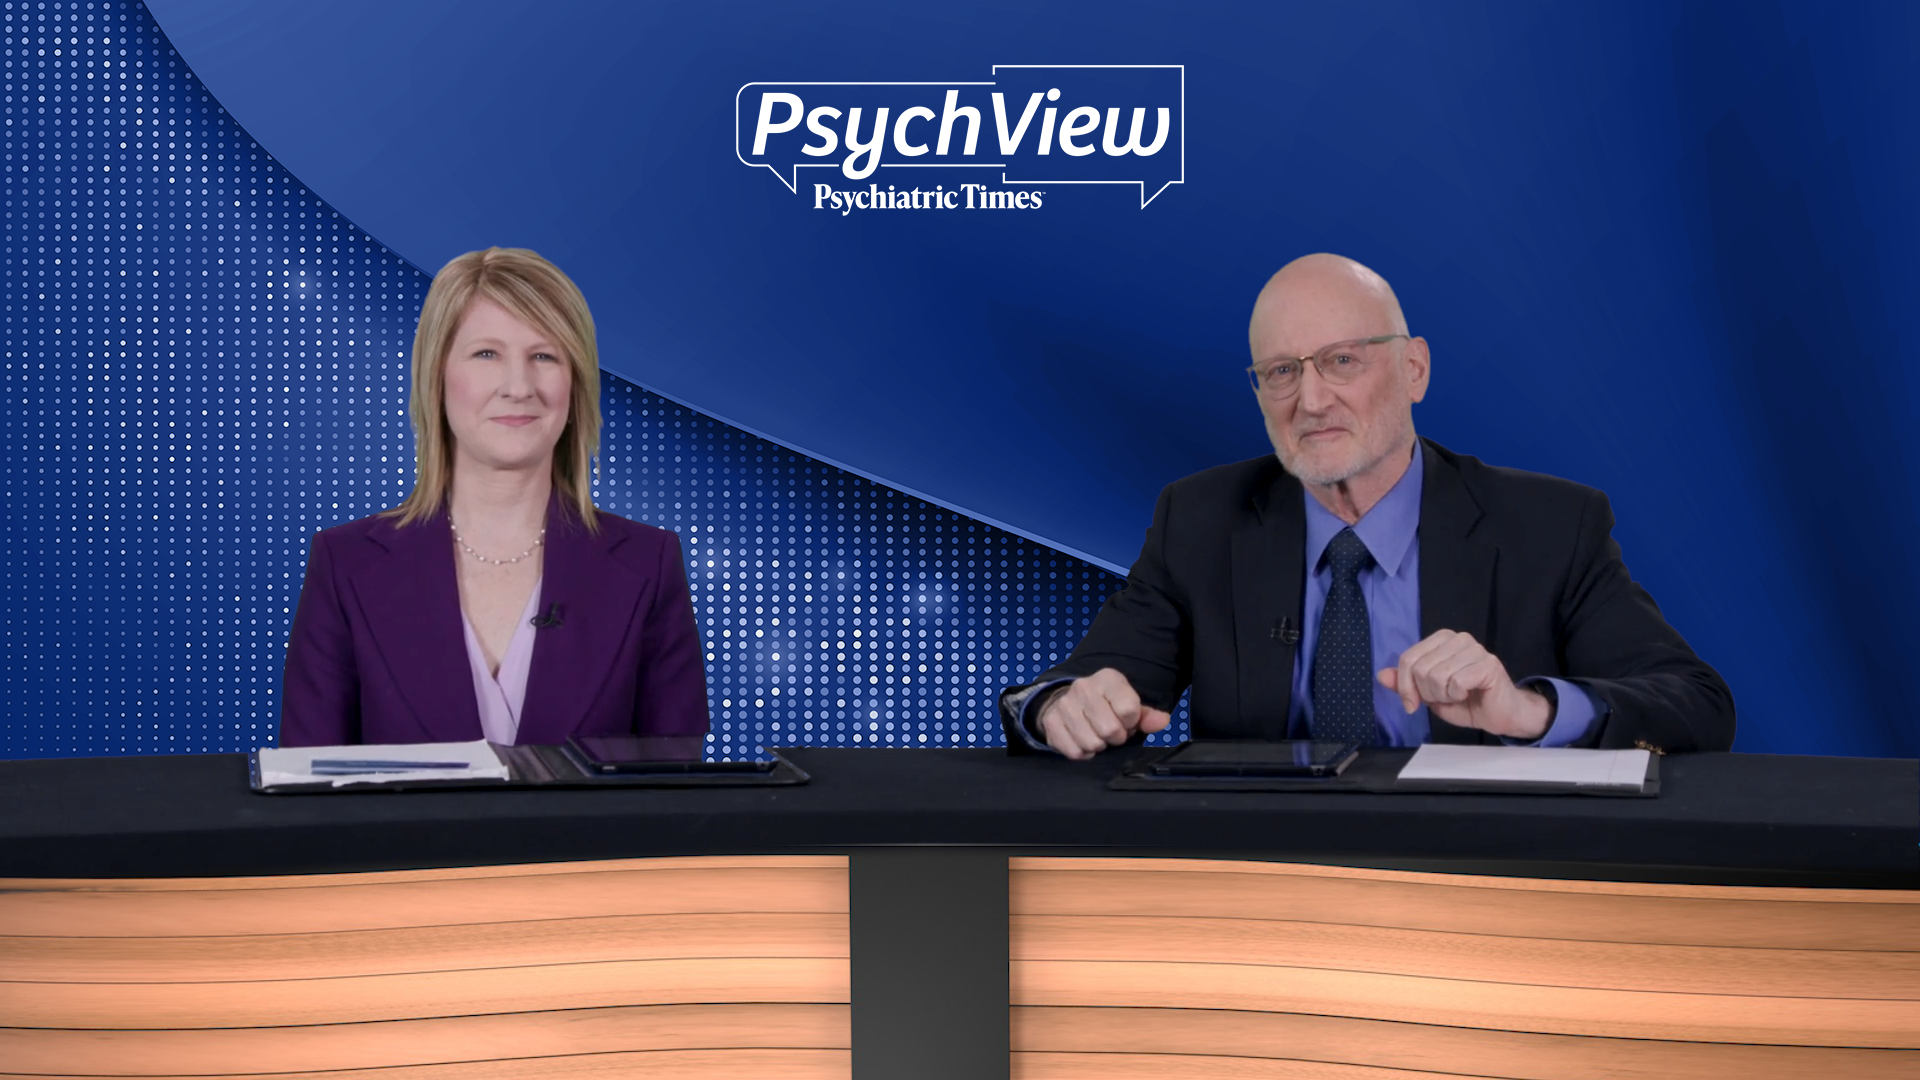 Video 3 - "Insights on the Pathophysiology of Schizophrenia"